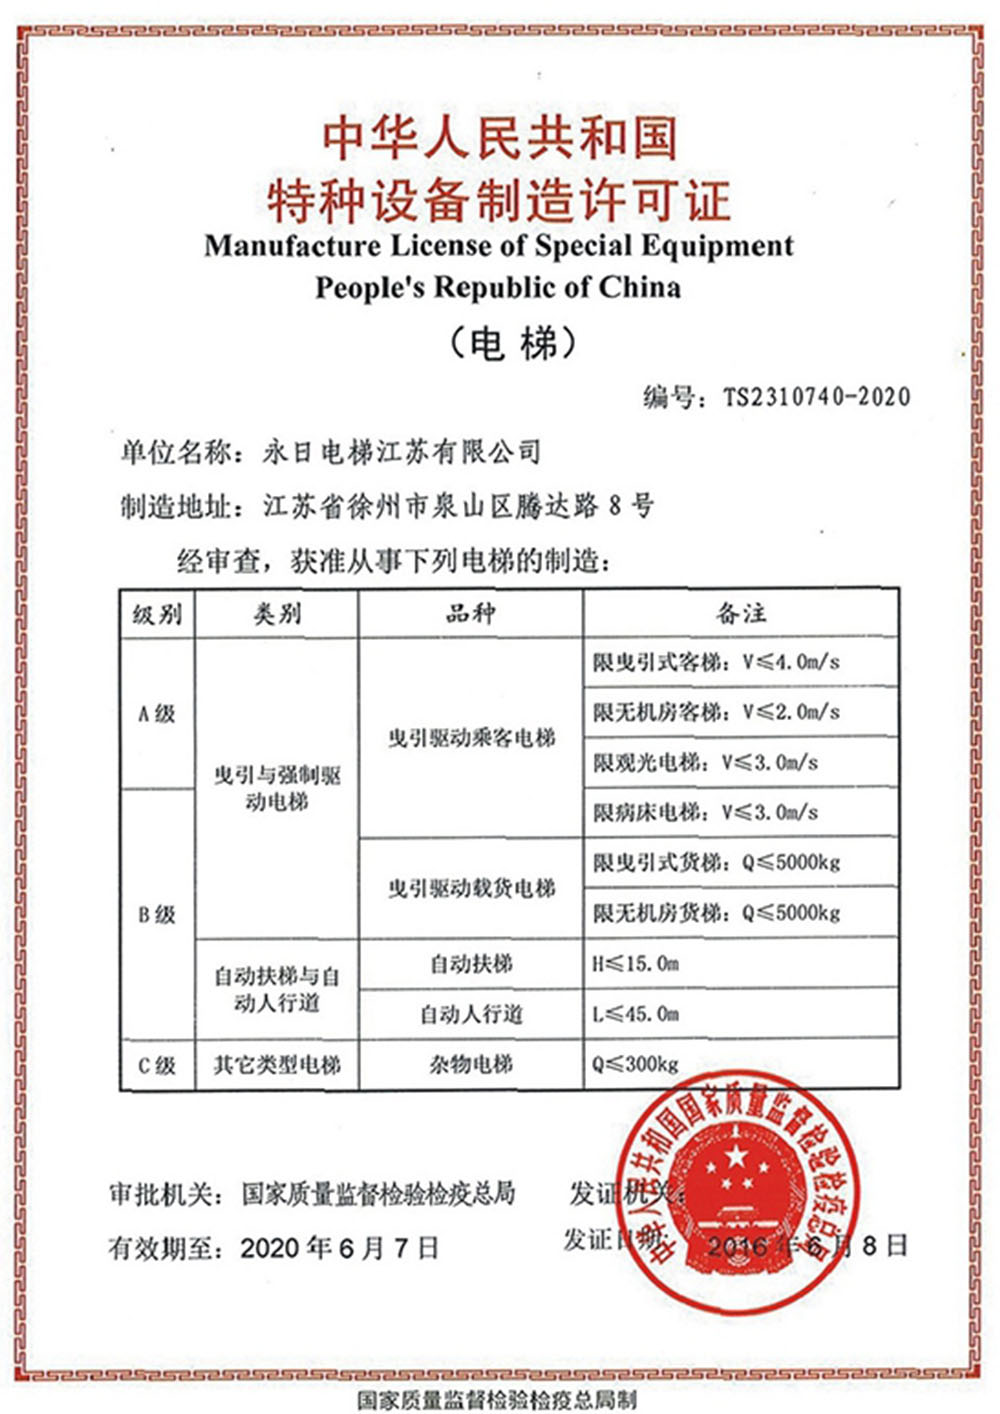 Special equipment manufacturing license (Jiangsu)